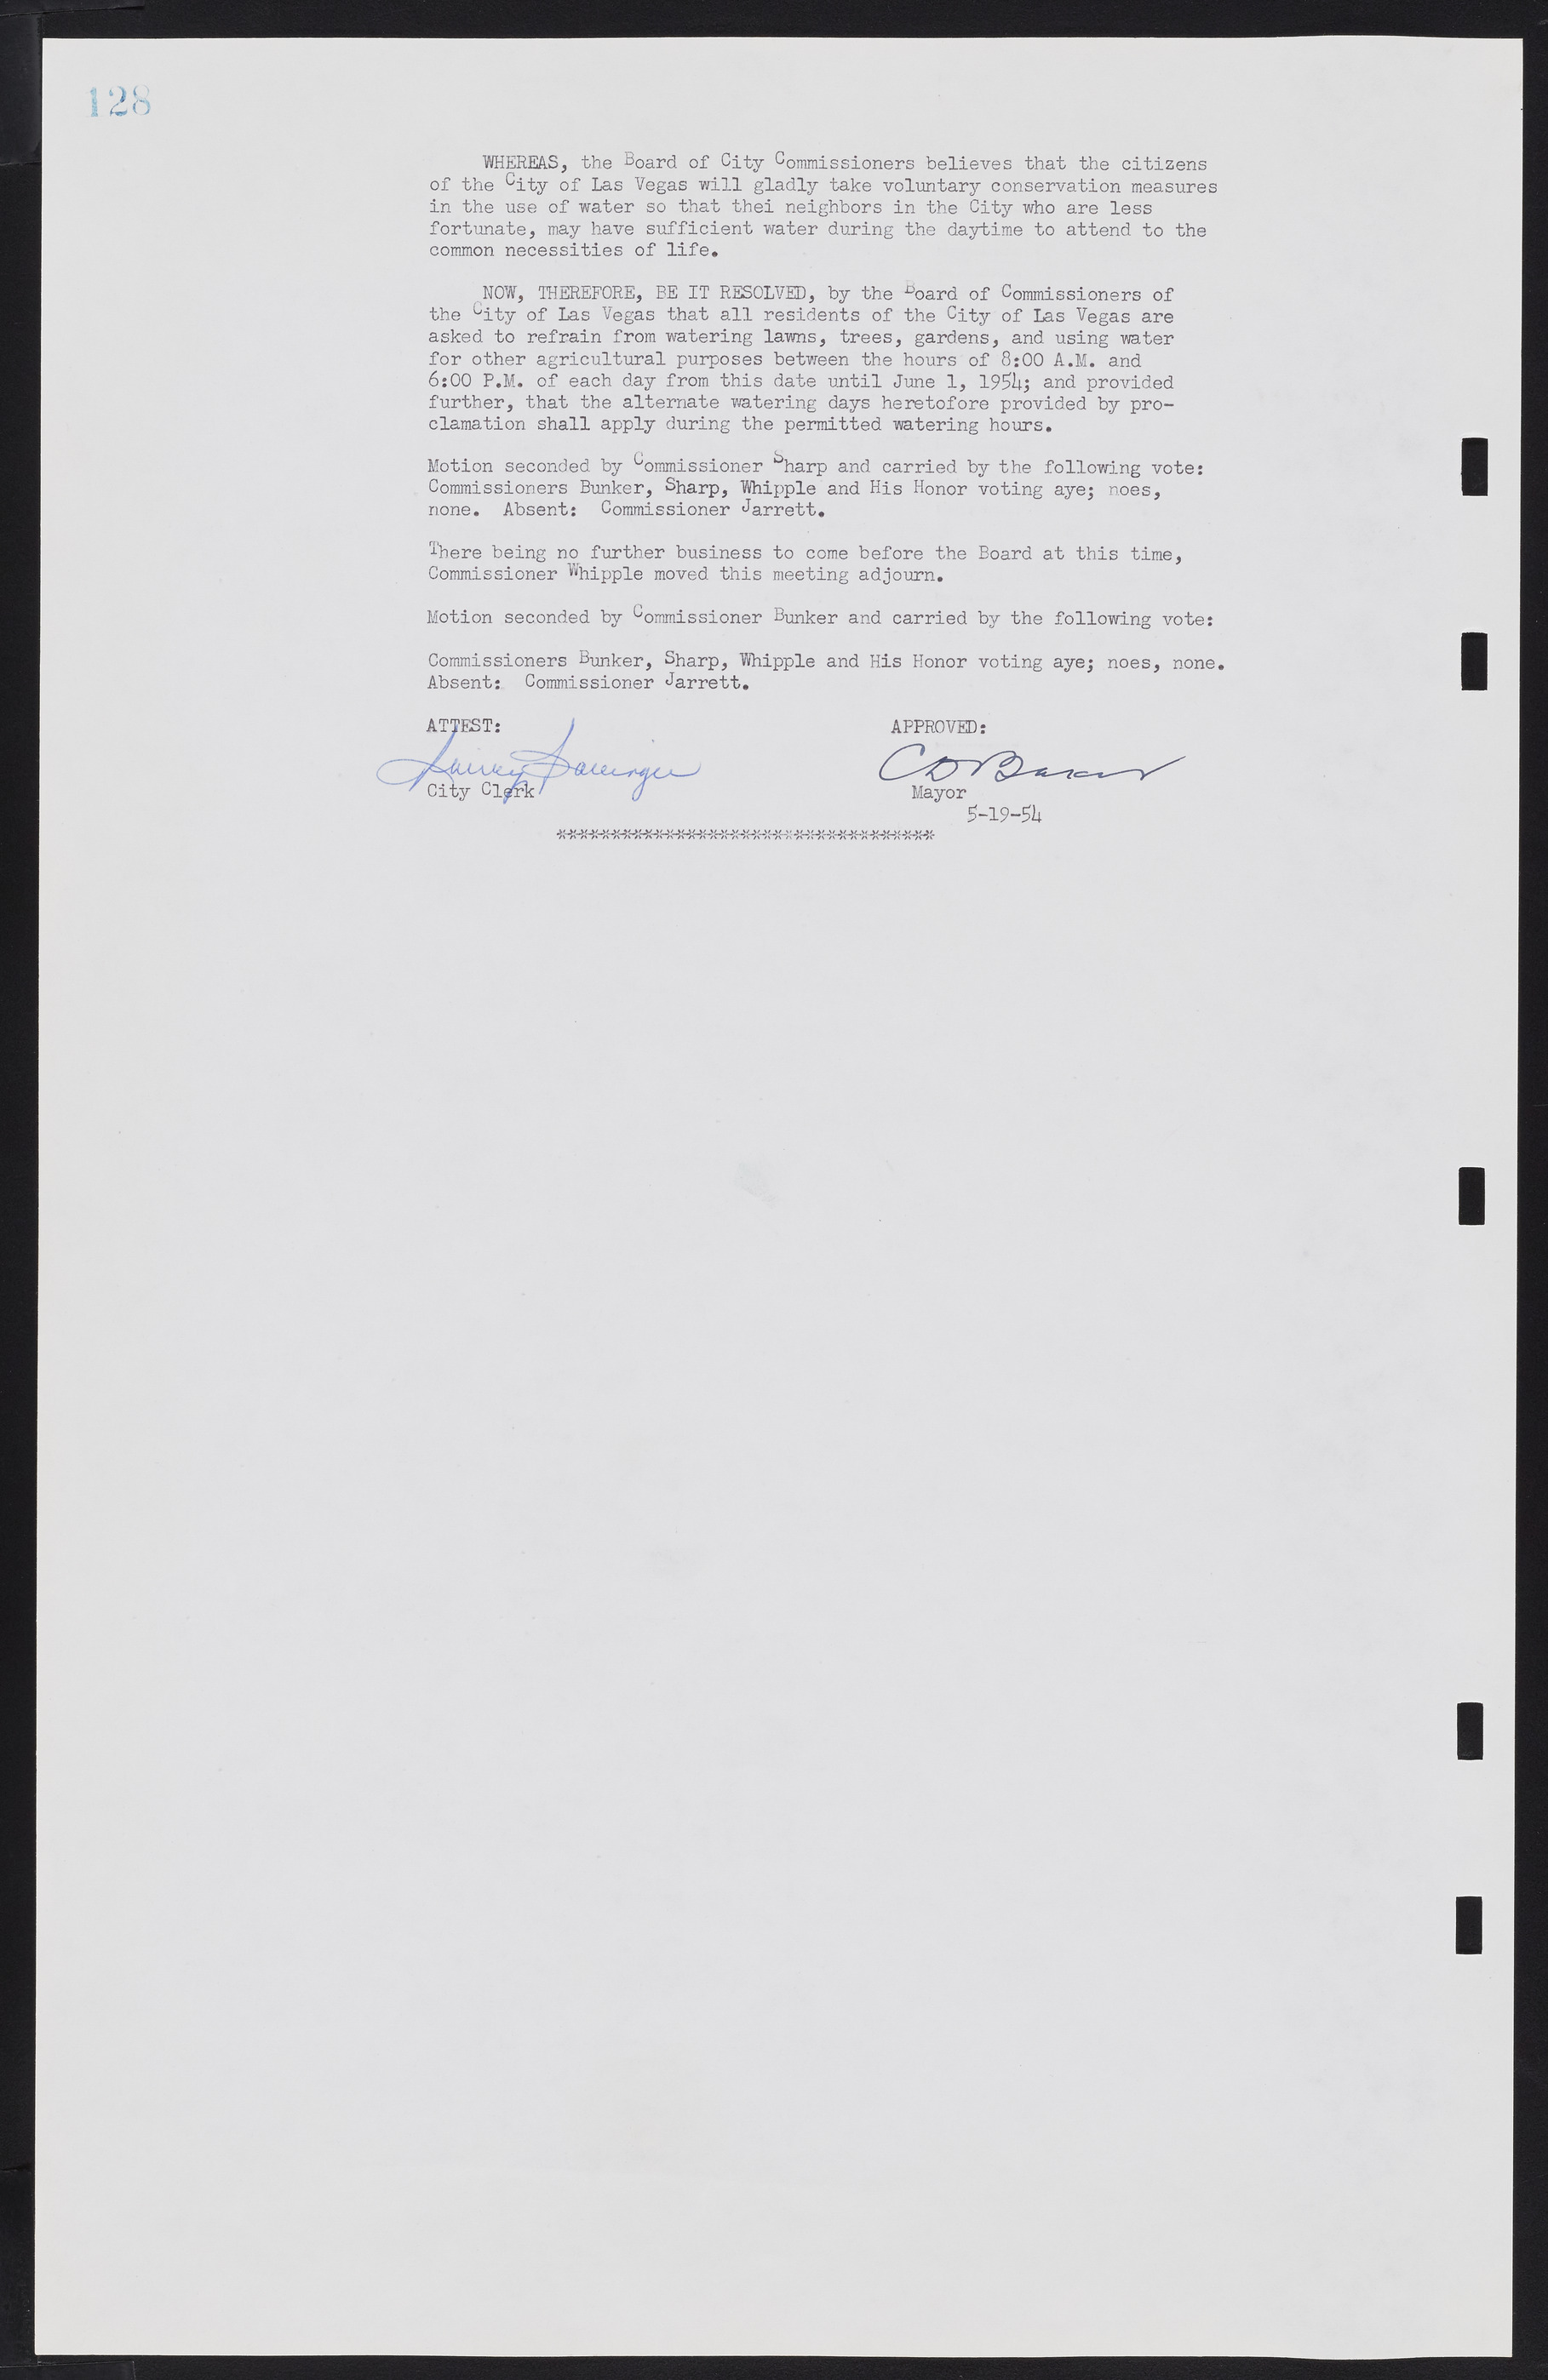 Las Vegas City Commission Minutes, February 17, 1954 to September 21, 1955, lvc000009-132